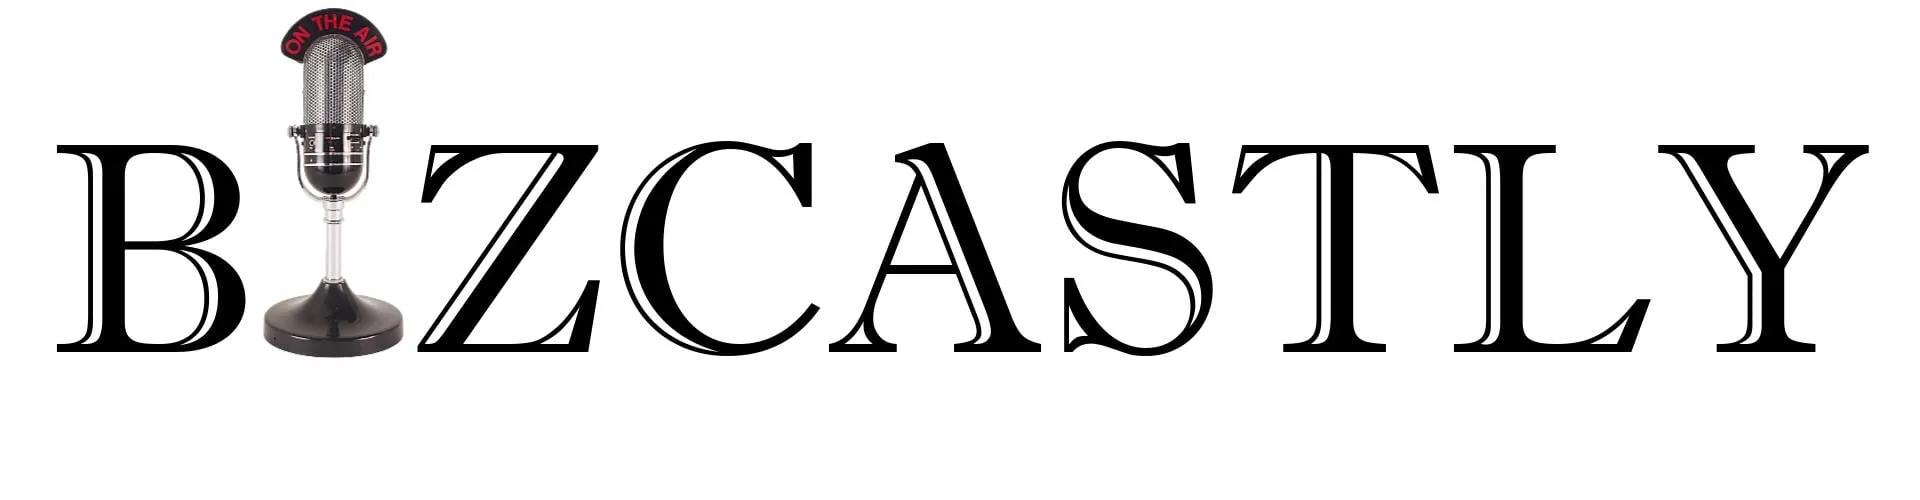 Bizcastly logo